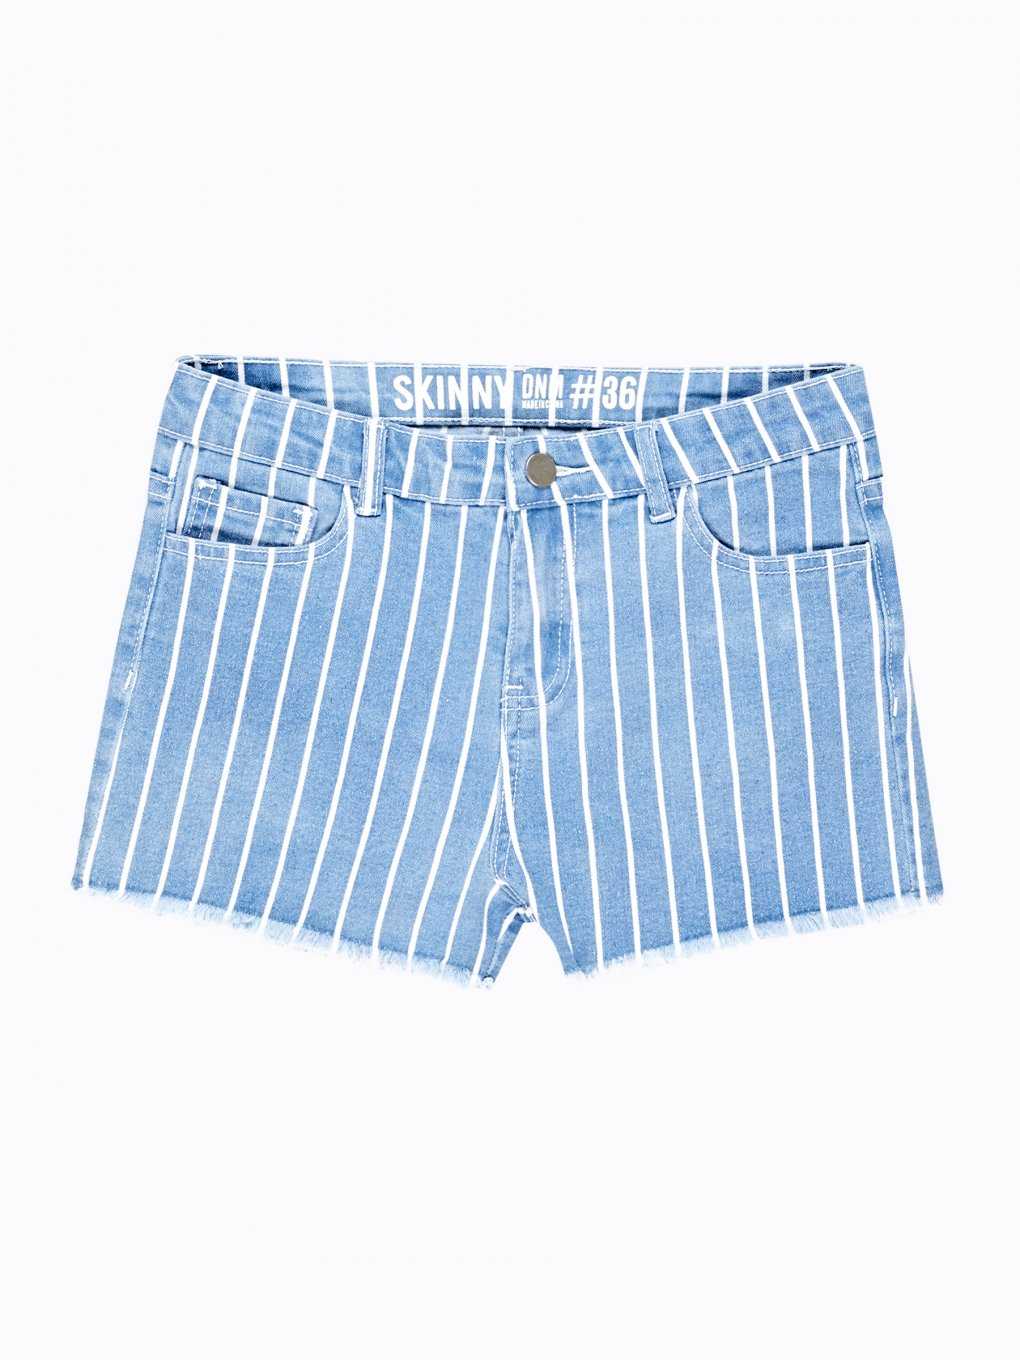 Striped denim shorts